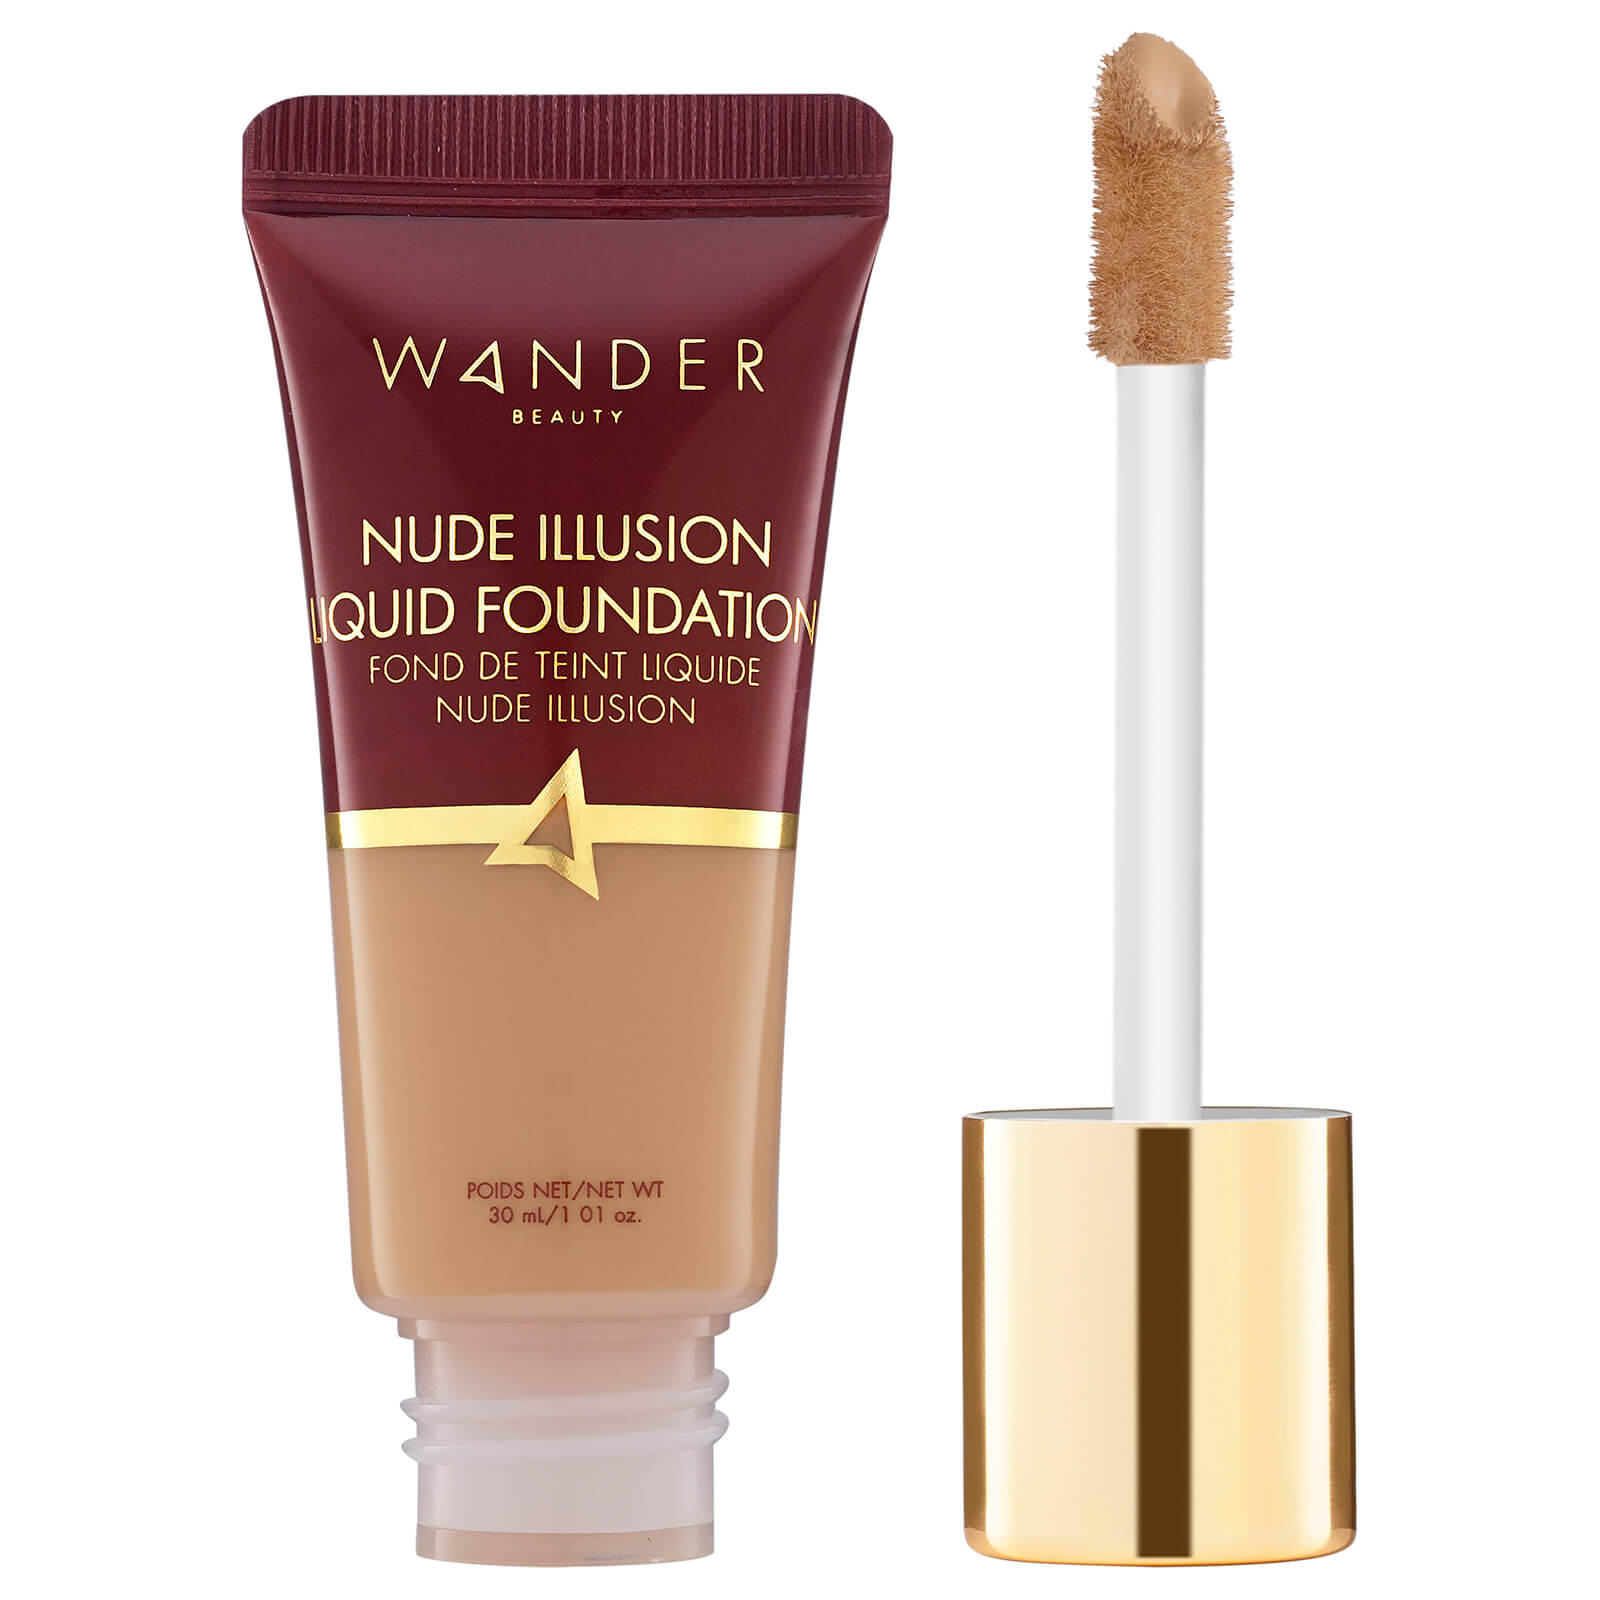 Wander Beauty Nude Illusion Liquid Foundation 1.01 oz (Various Shades) - Golden Medium